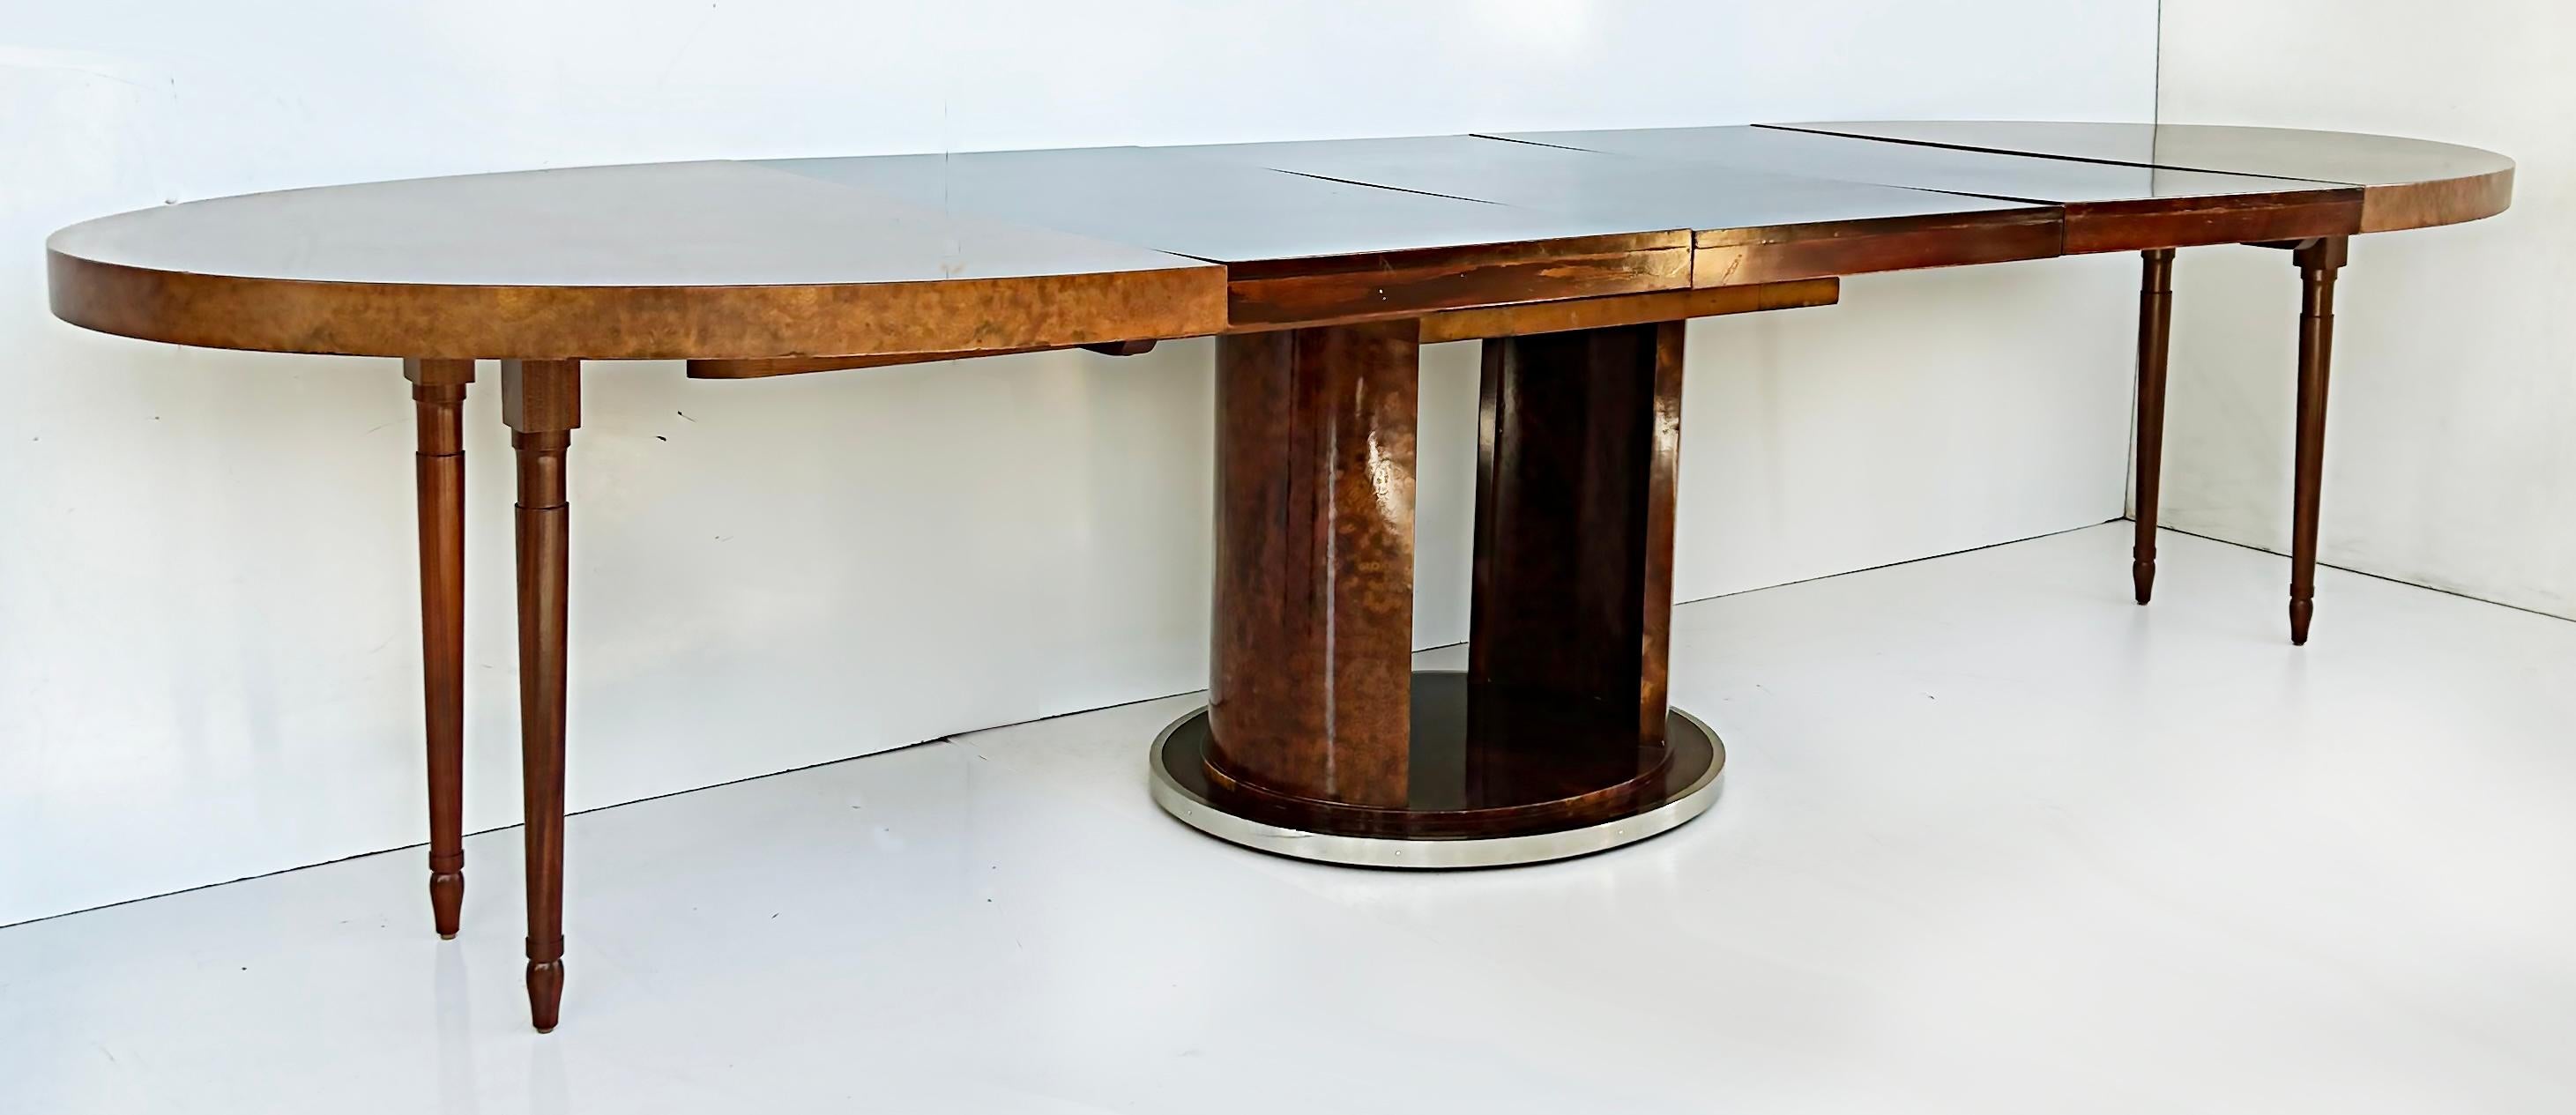 20th Century French Art Deco Rinck Paris Burlwood Dining Table 1930s, Extending Oval Pedestal